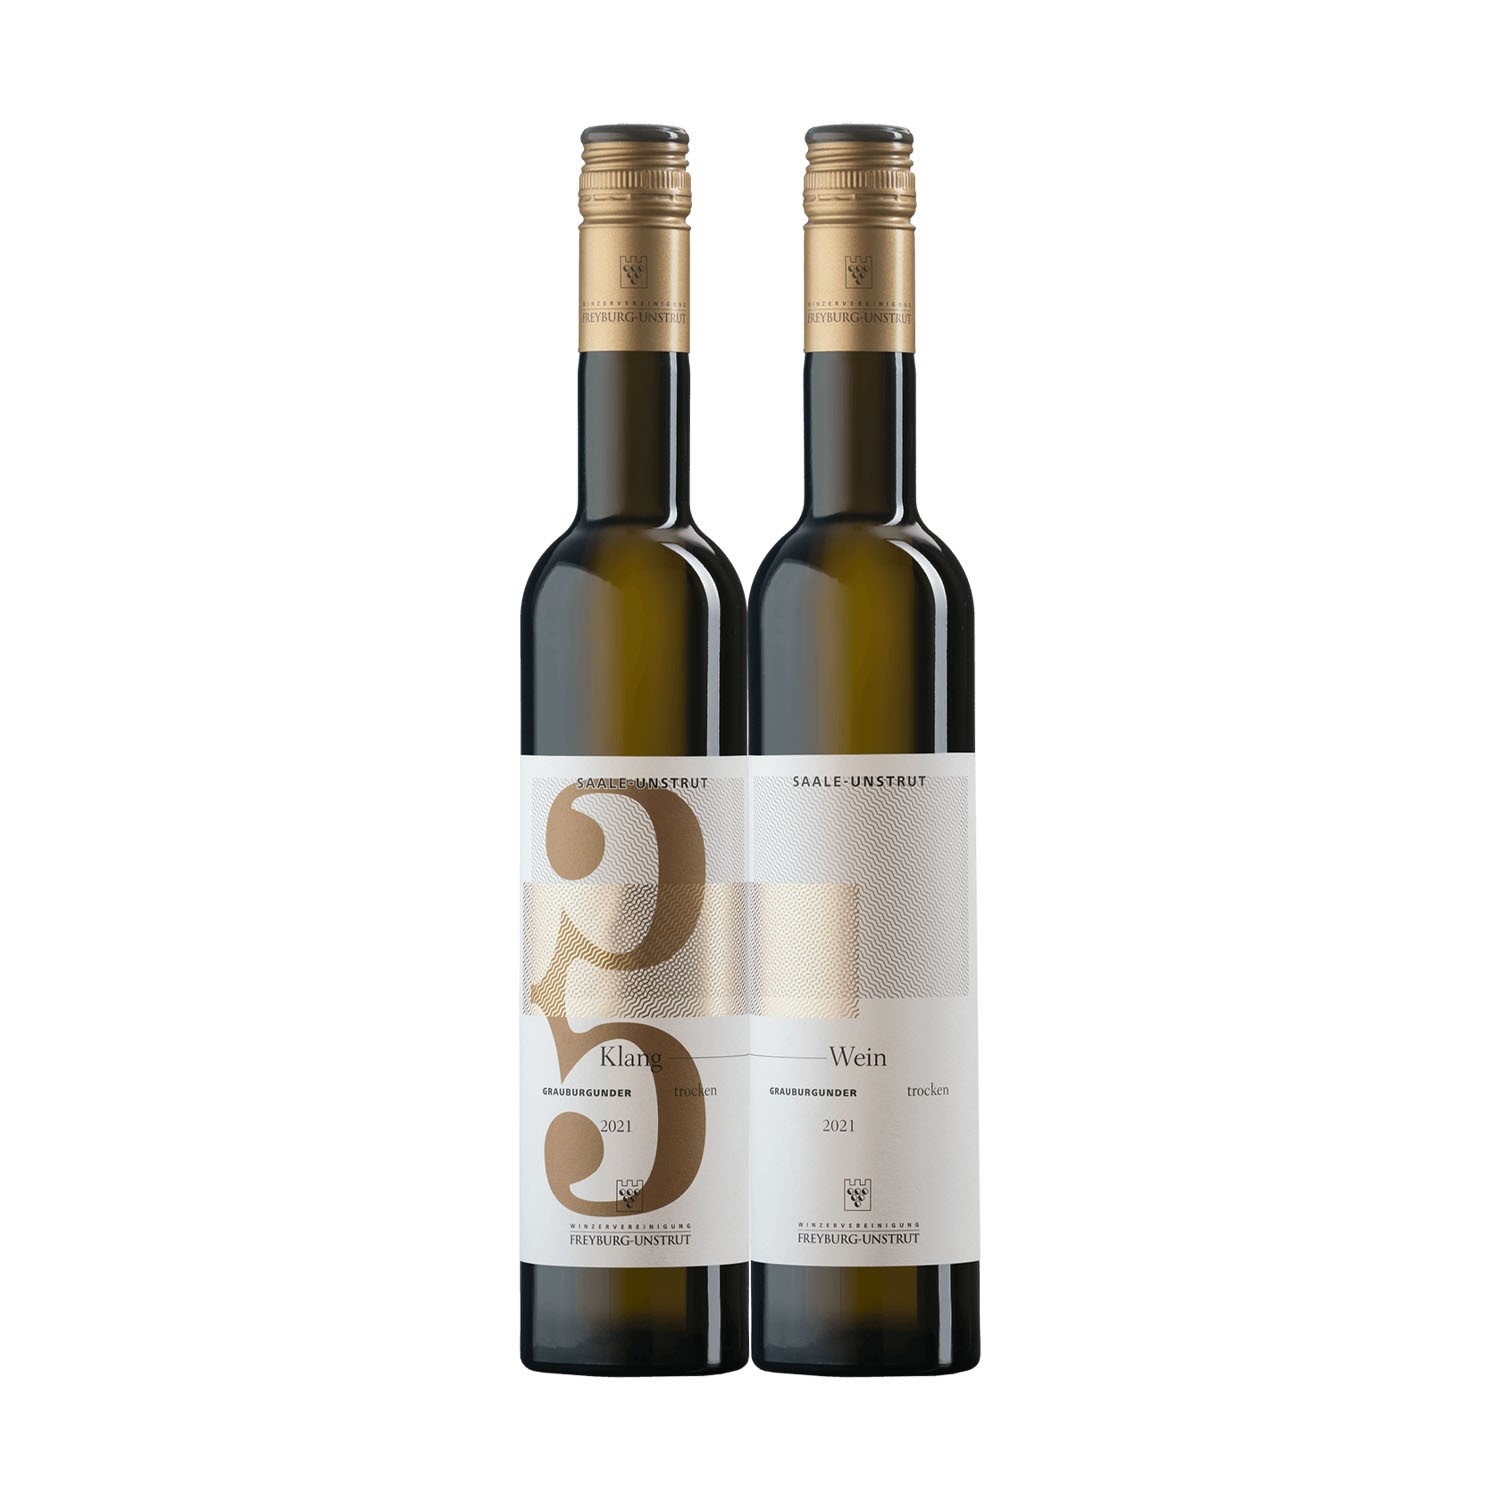 Klang-Wein Grauburgunder 2021 DQW 2 0,5l x